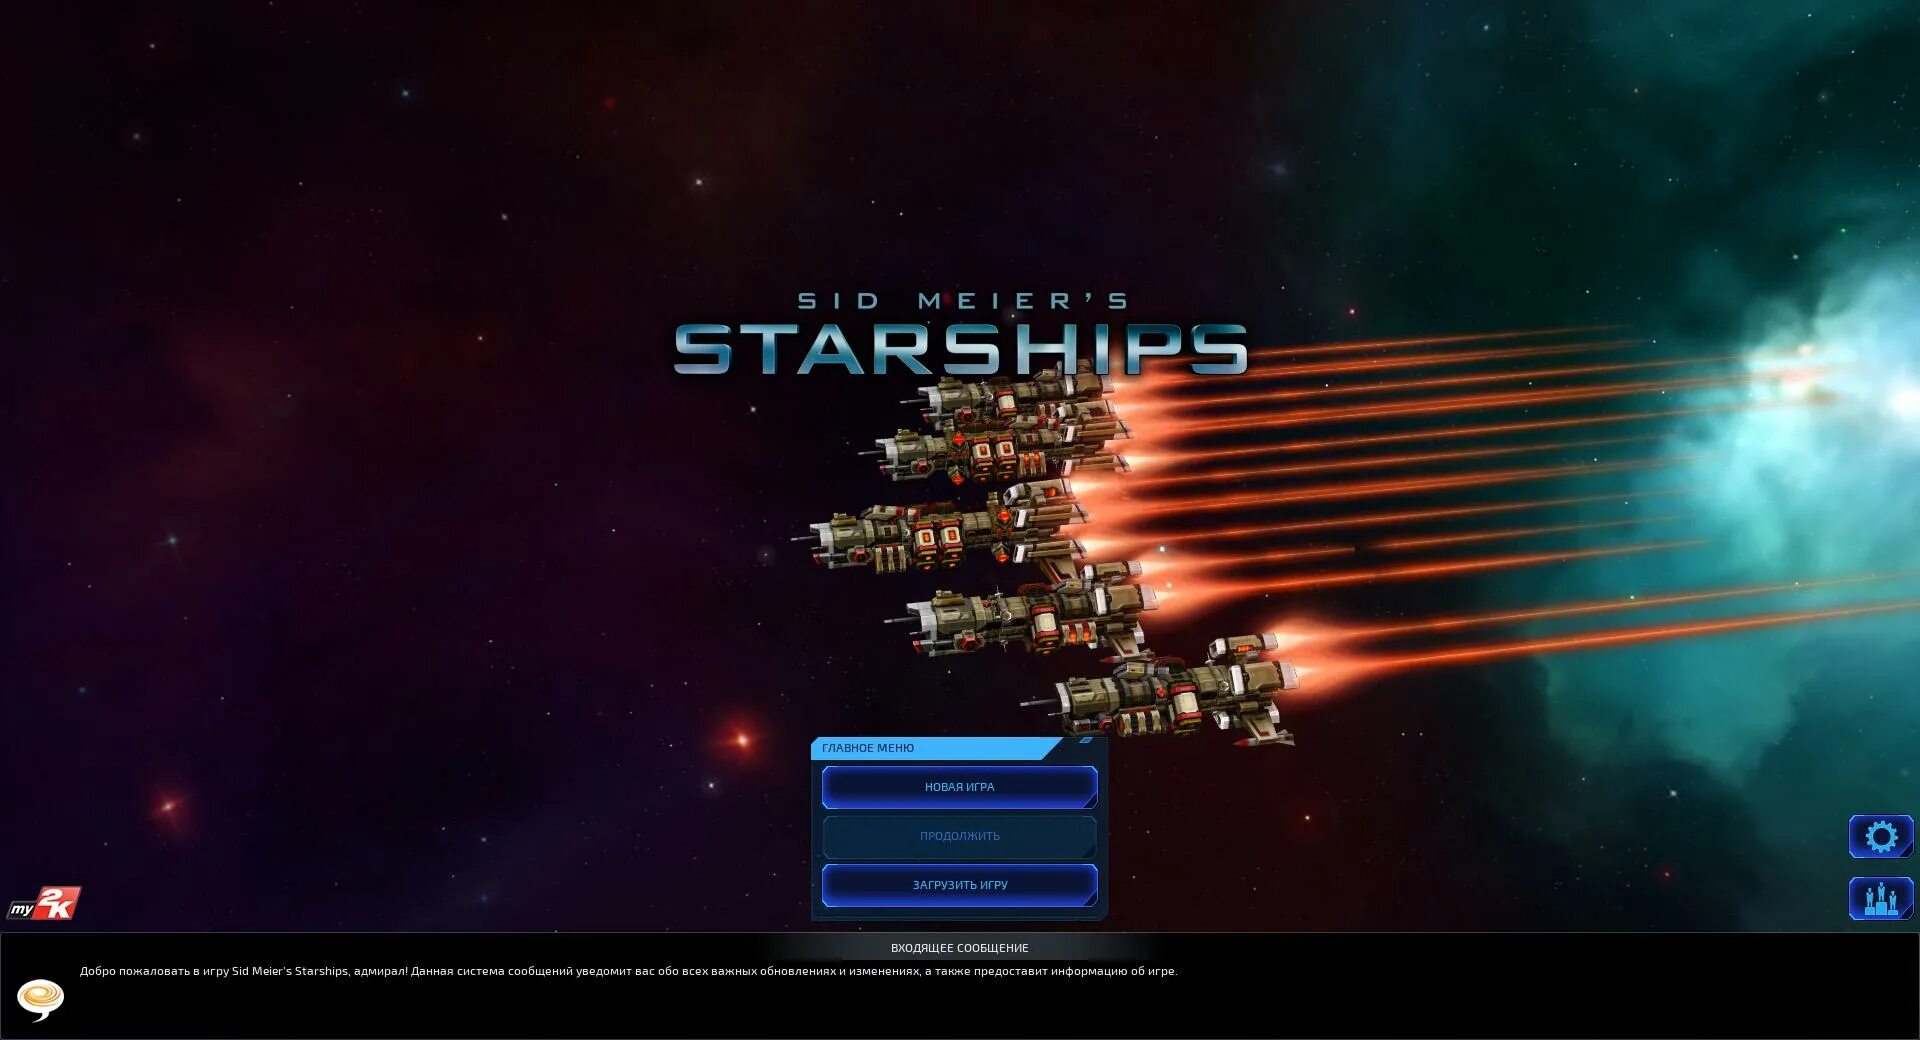 Us games systems. Sid Meier's Starships. Sid Meier's Starships Colony ship. Механики игры. Sid Meier's Starships screenshots.